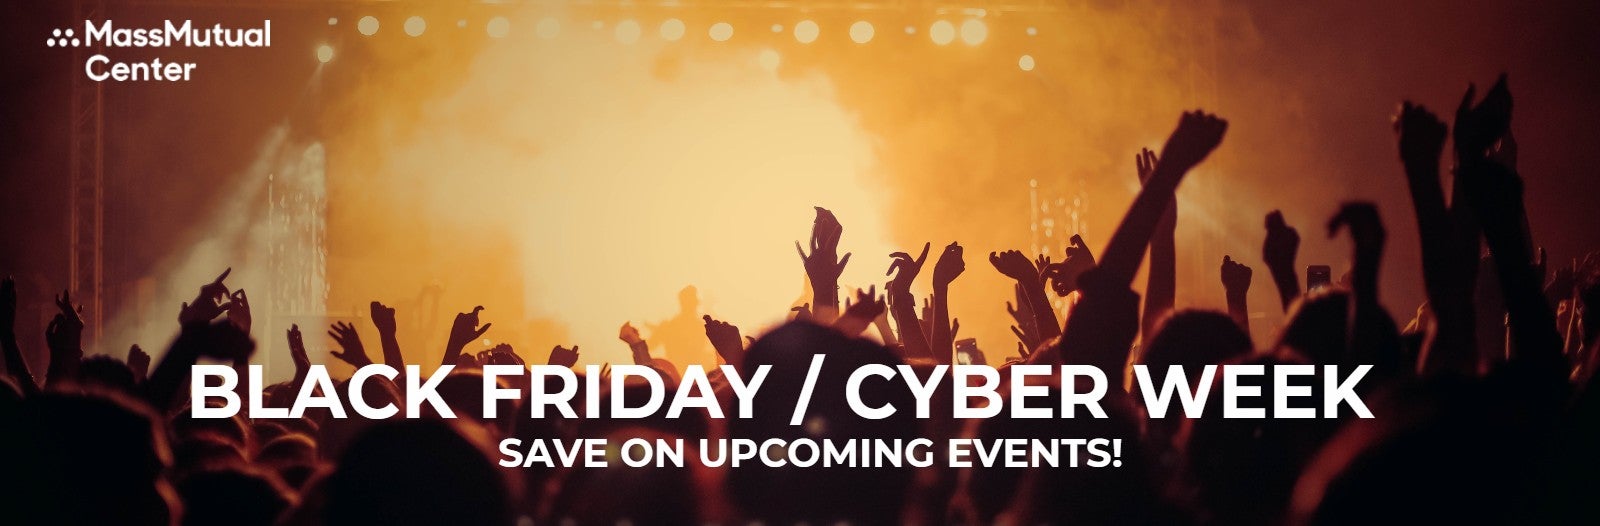 Black Friday / Cyber Week Deals